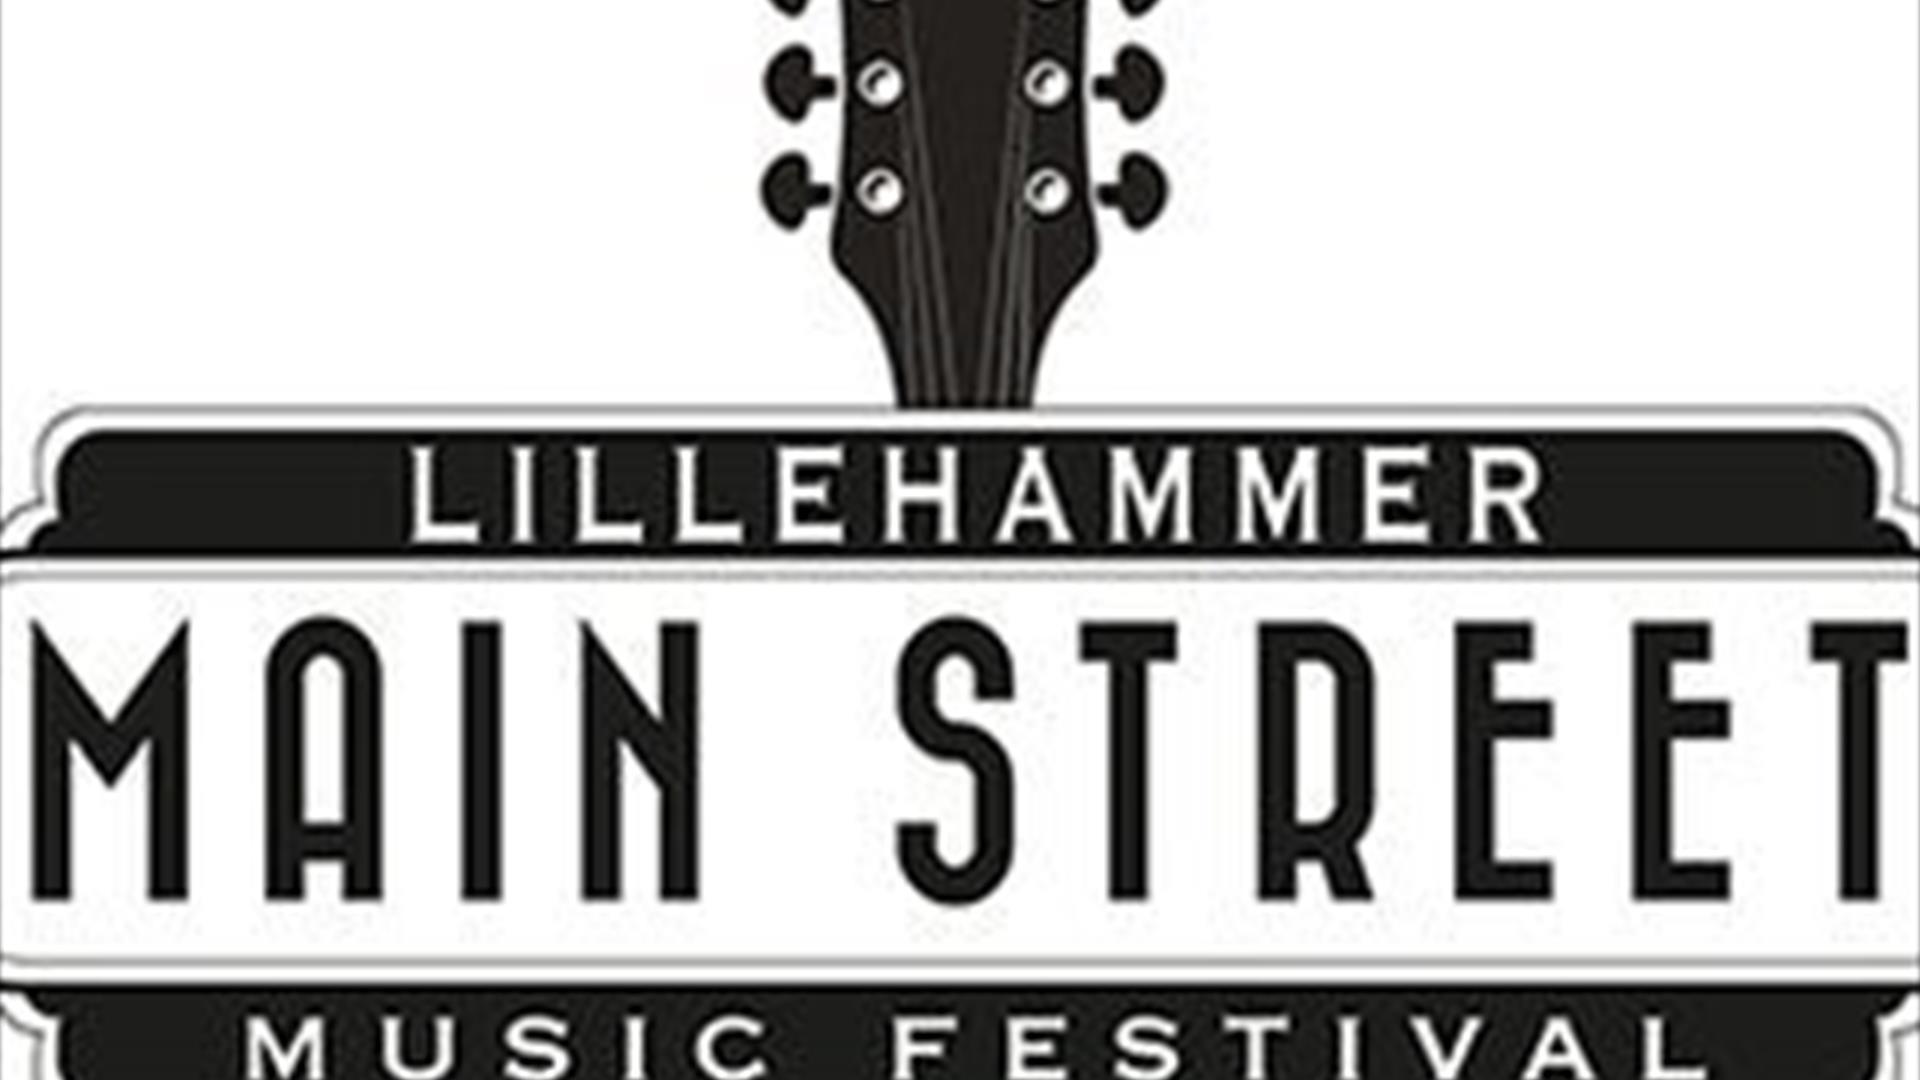 Lillehammer Main Street festival